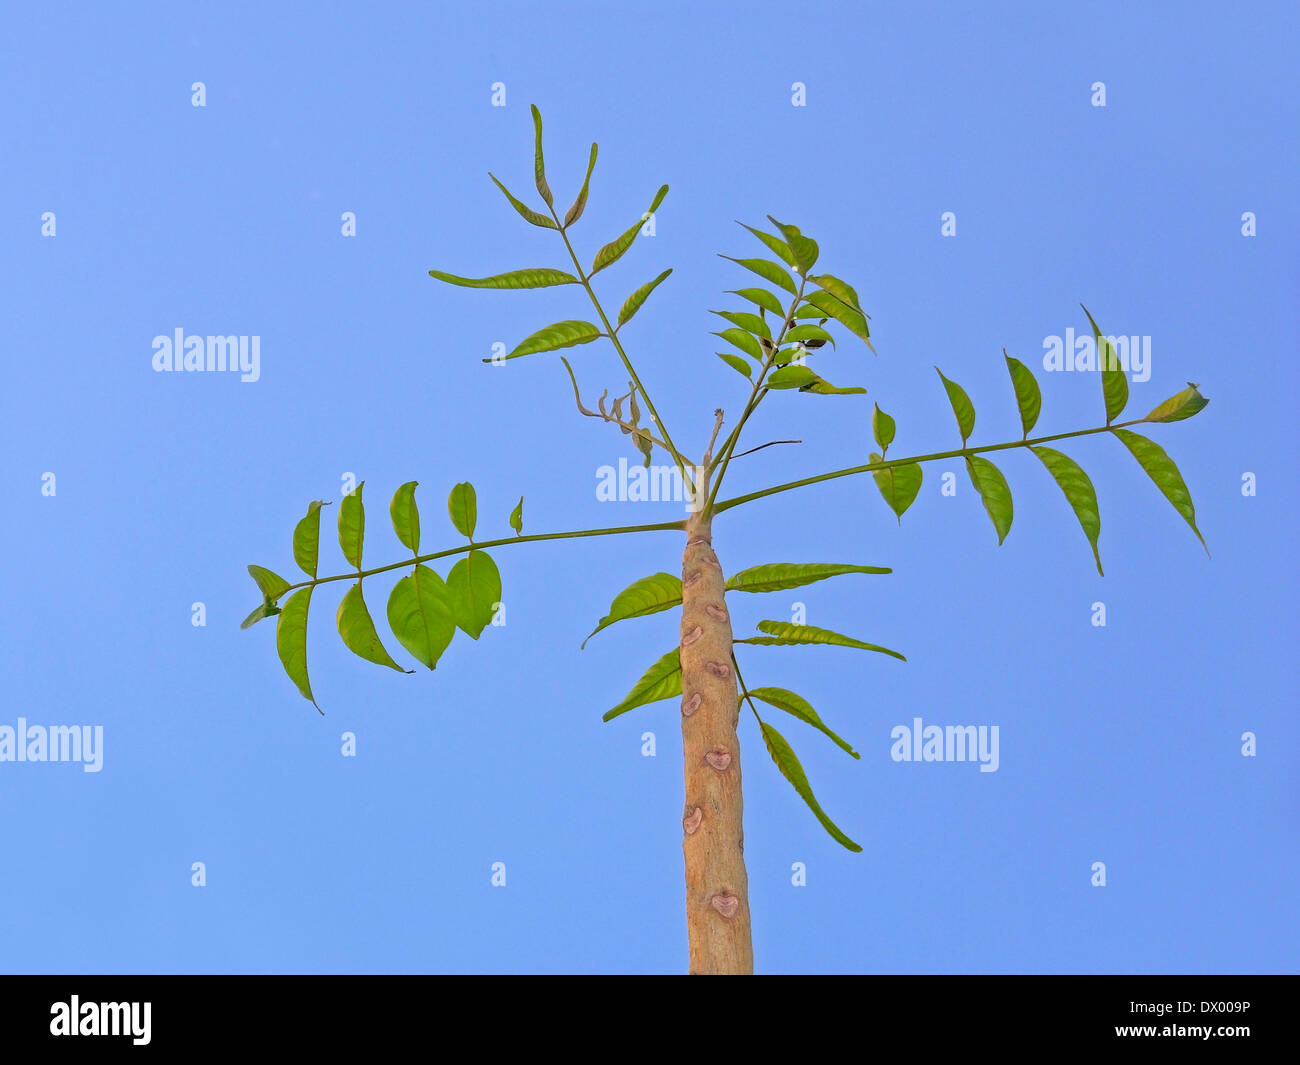 Indian Ash Tree, Moya, Lannea coromandelica, Dialium coromandelicum, Lannea grandis, Odina wodier Stock Photo